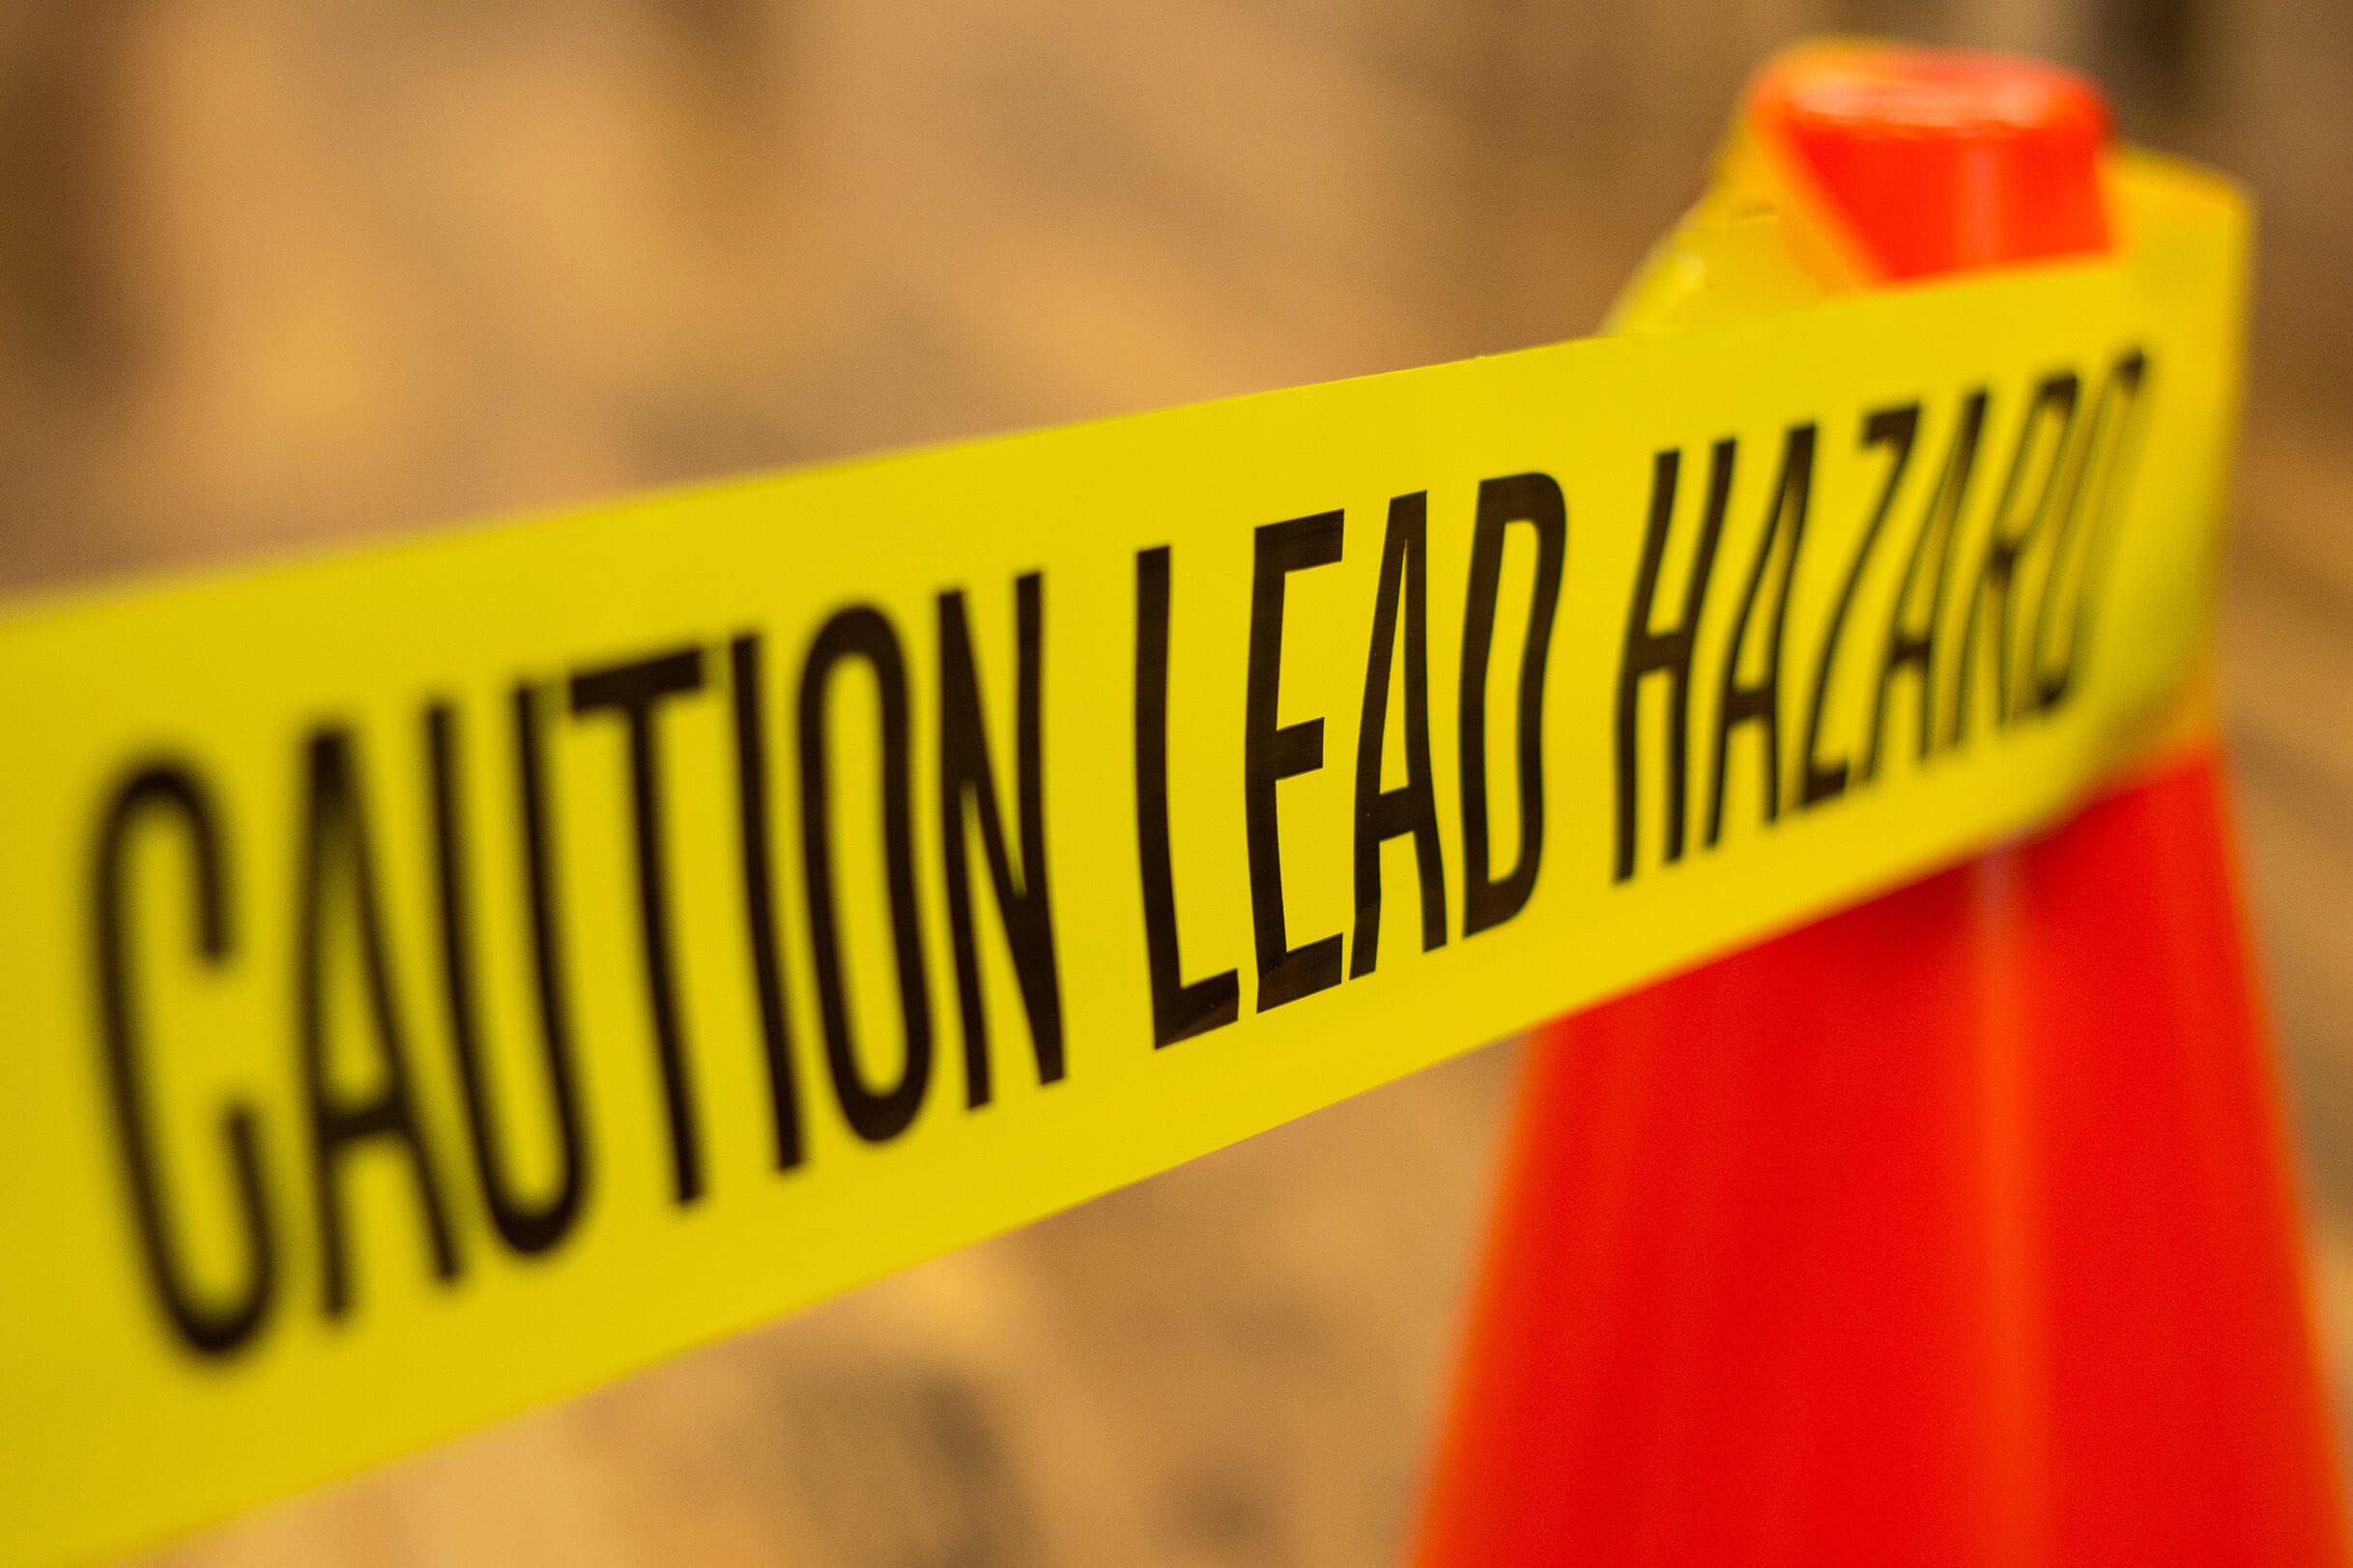 Caution lead hazard tape